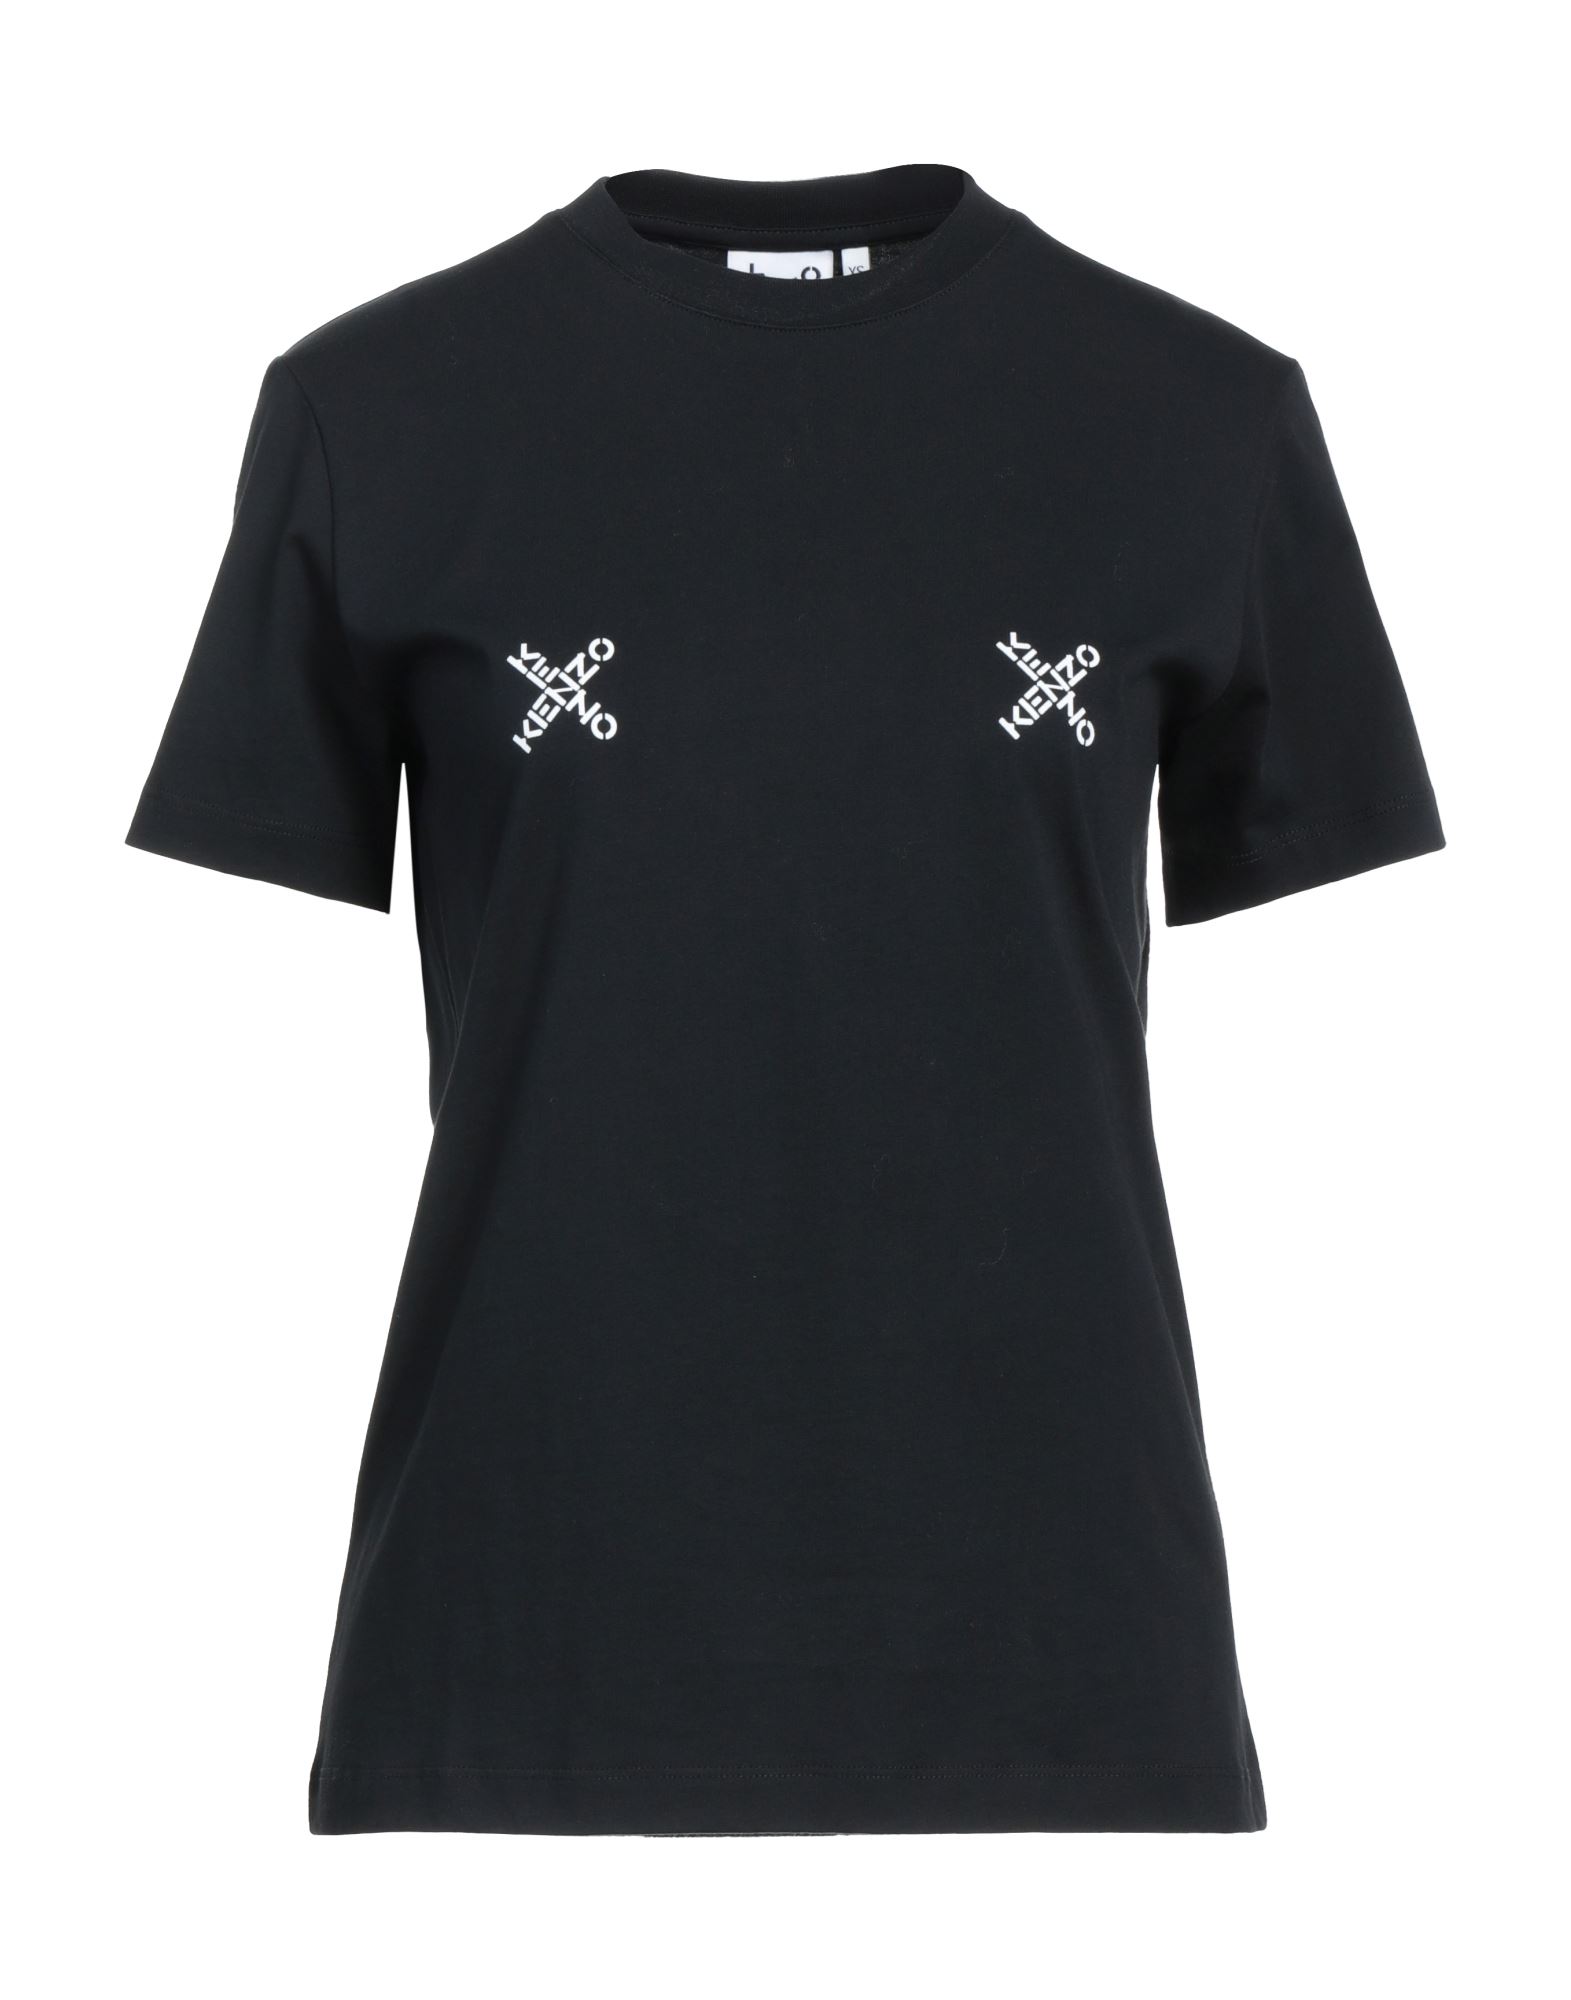 Kenzo T-shirts In Black